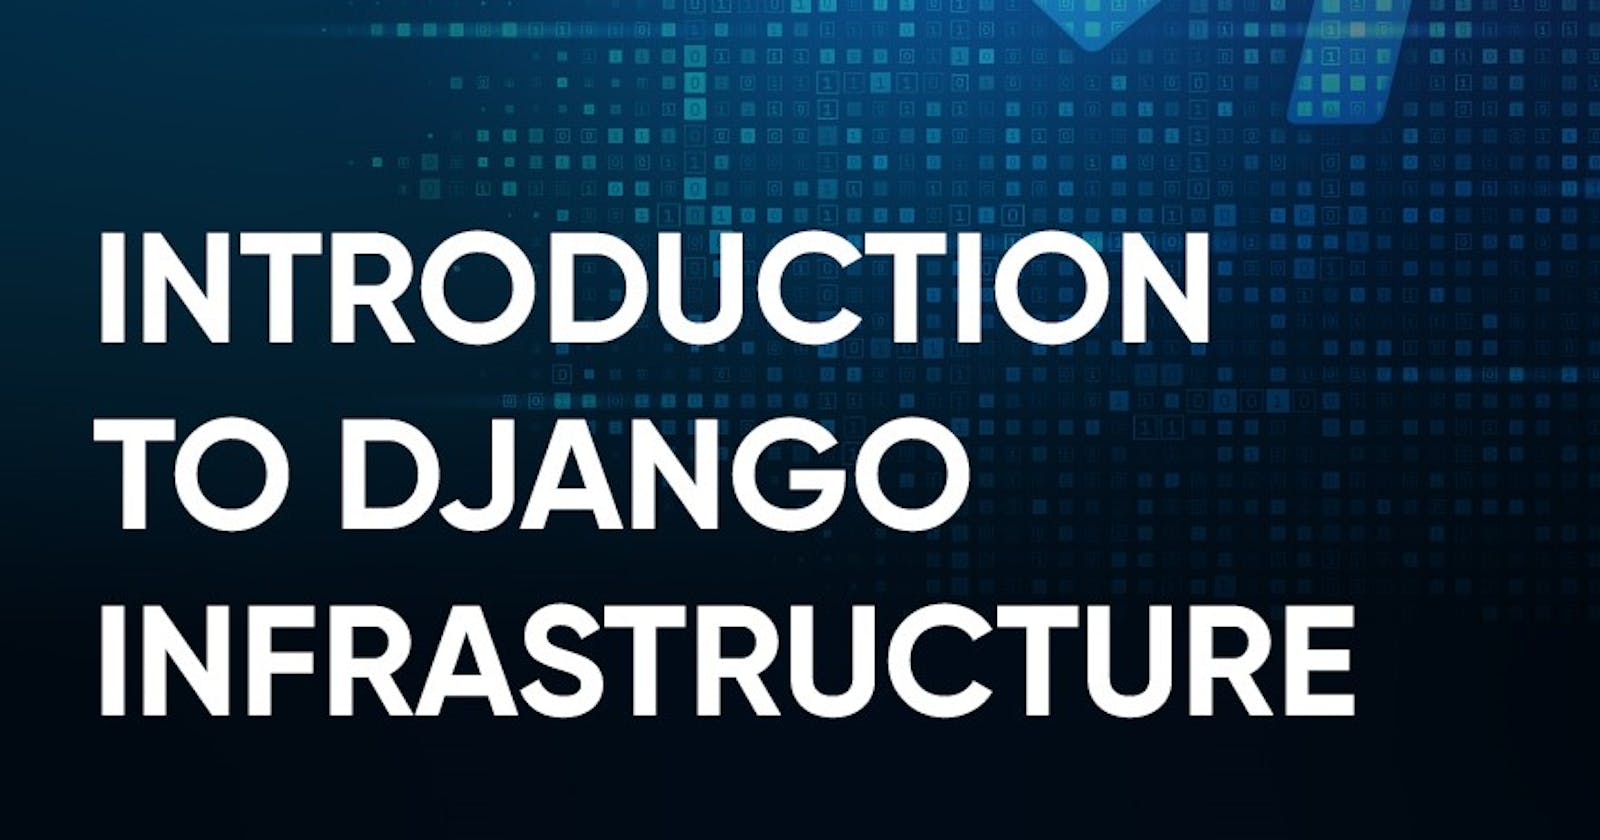 Introduction to Django infrastructure